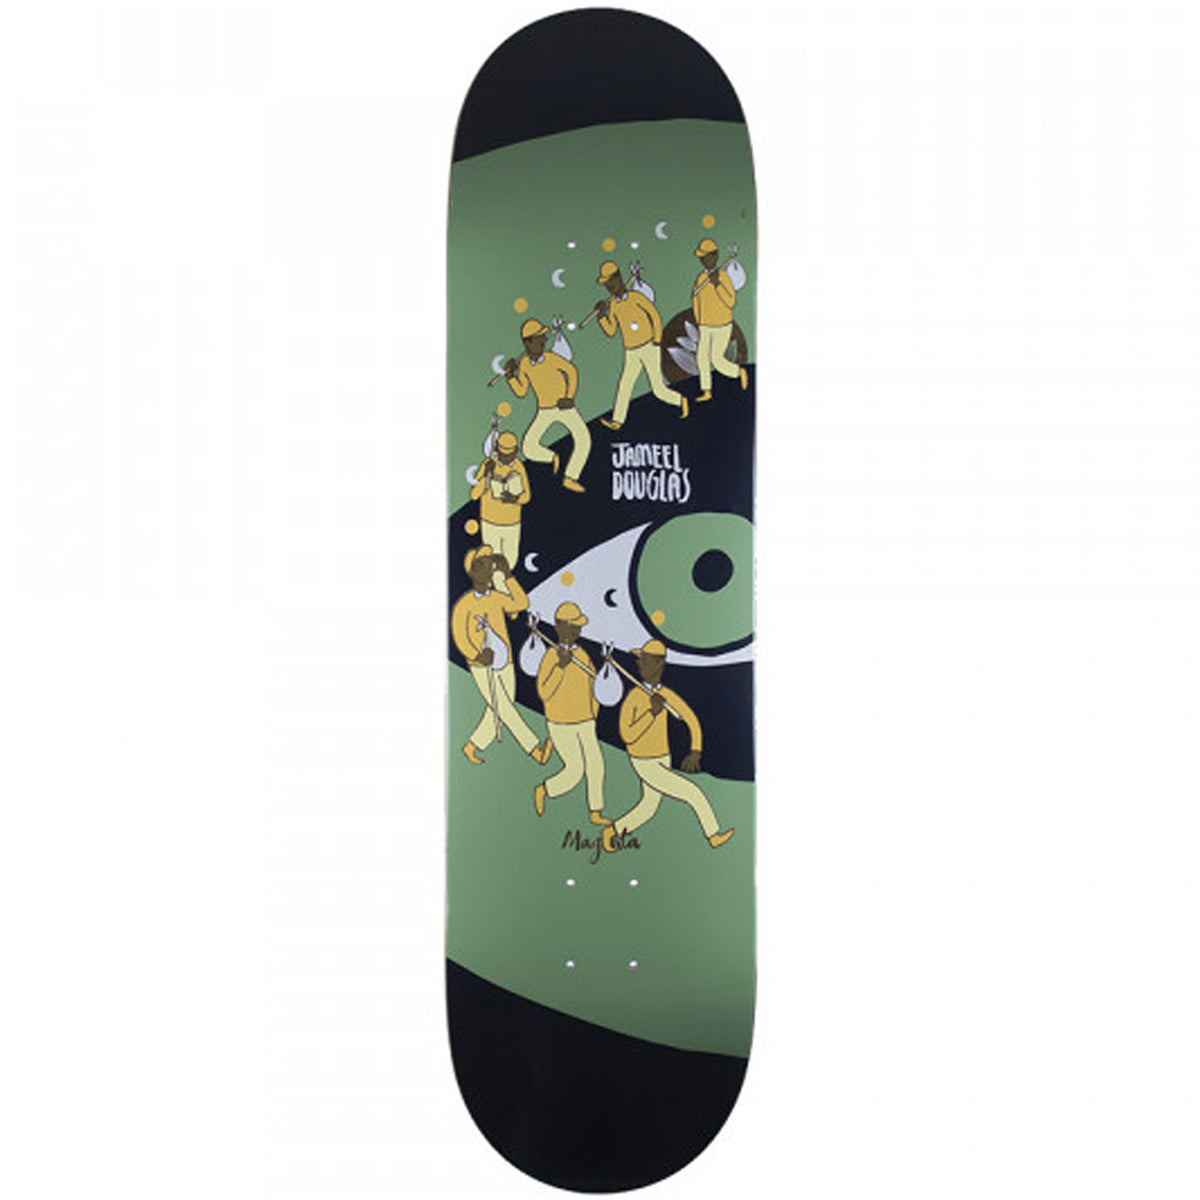 Magenta New Pro 1 8.125" Skateboard Deck